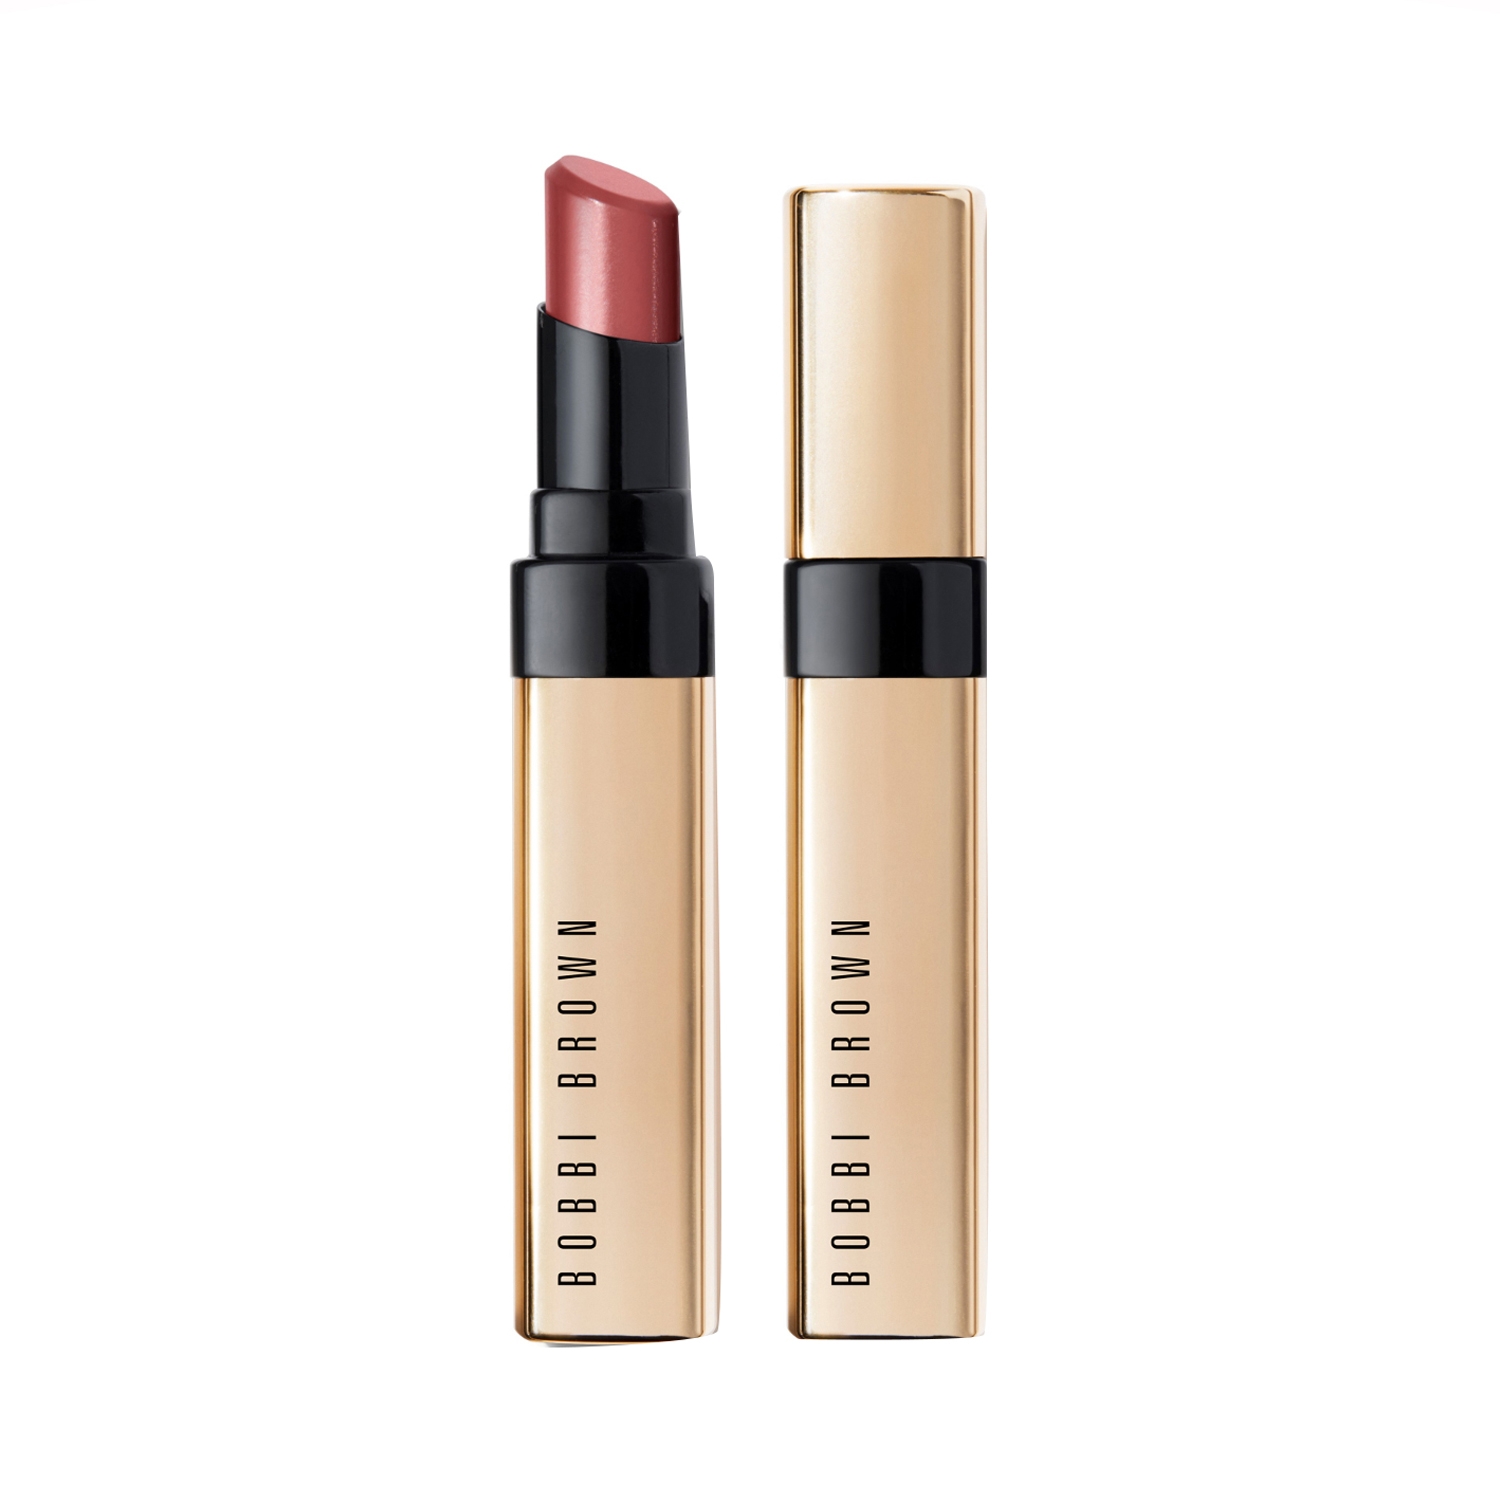 Bobbi Brown | Bobbi Brown Luxe Shine Intense Lipstick - Passion Flower (3.4g)